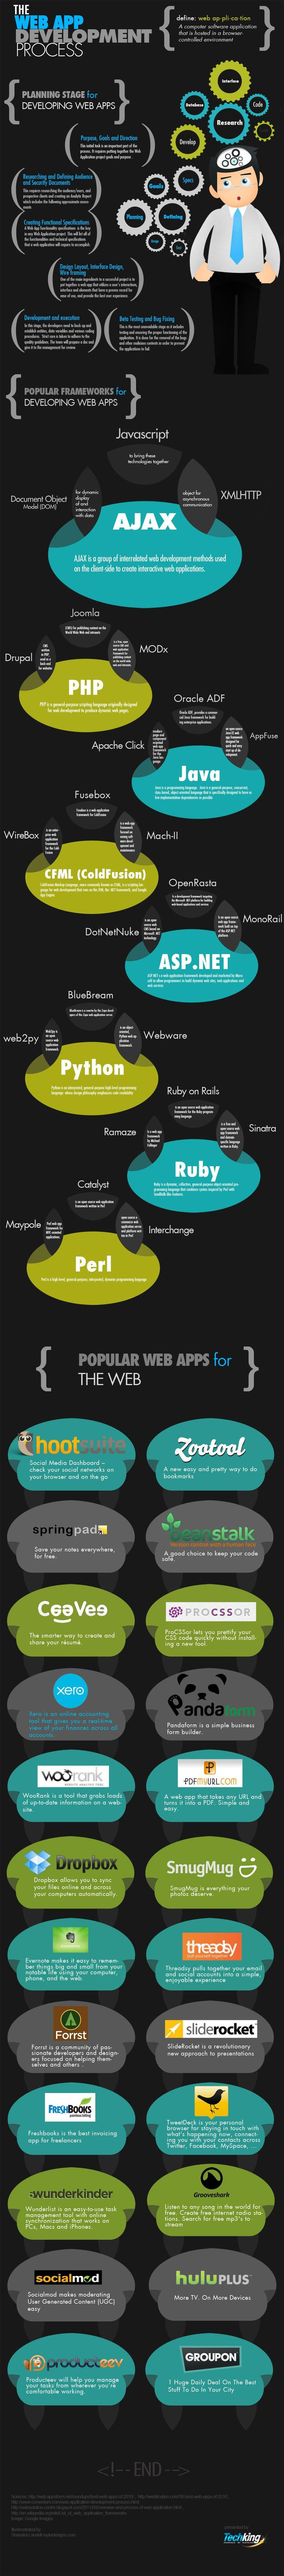 The Web App Development Process Explained In Detai...